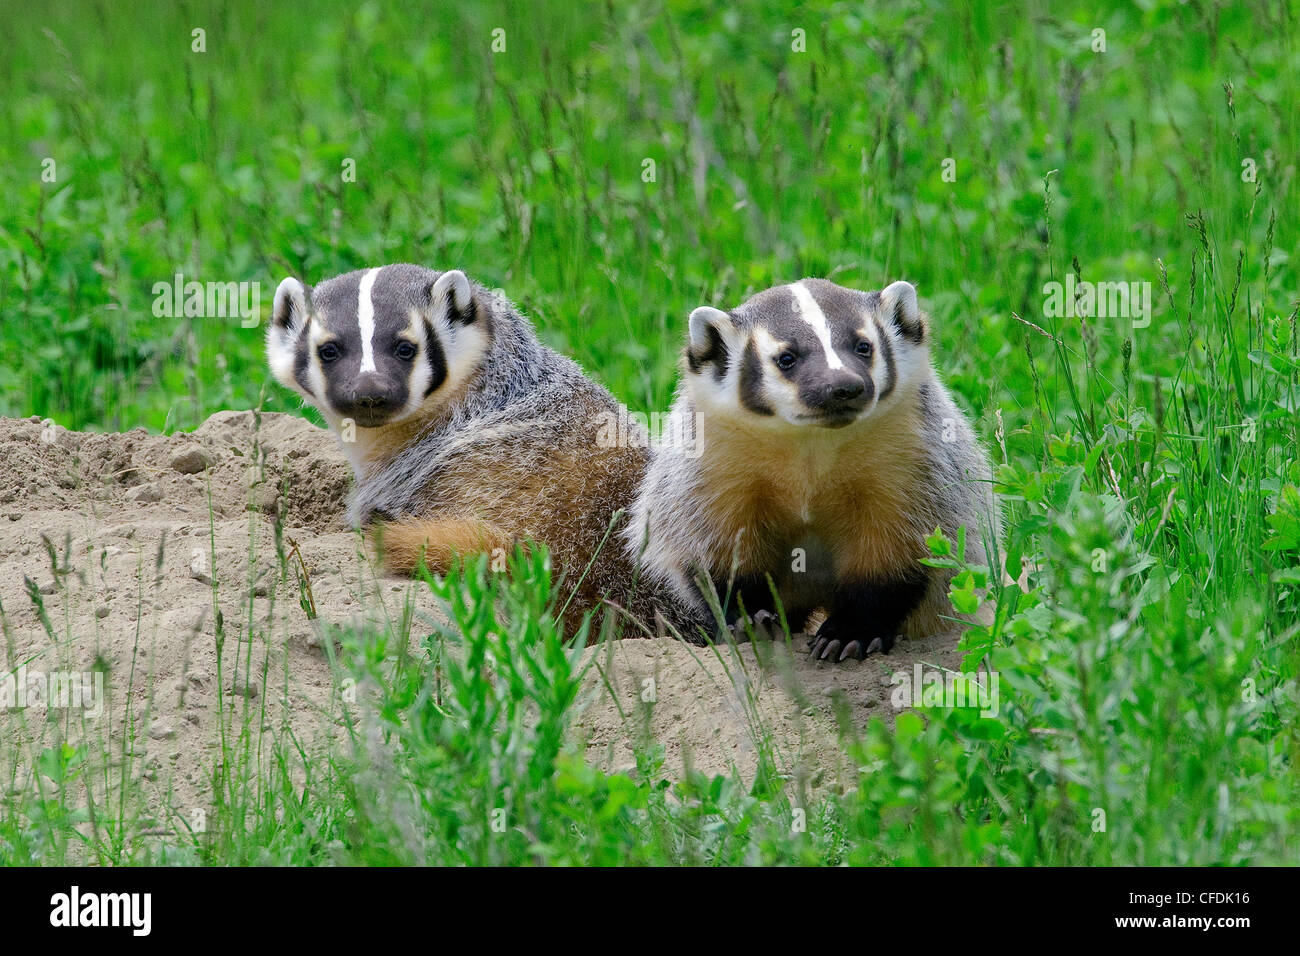 American badger kits (Taxidea taxus) at their natal burrow, central British Columbia, Canada Stock Photo